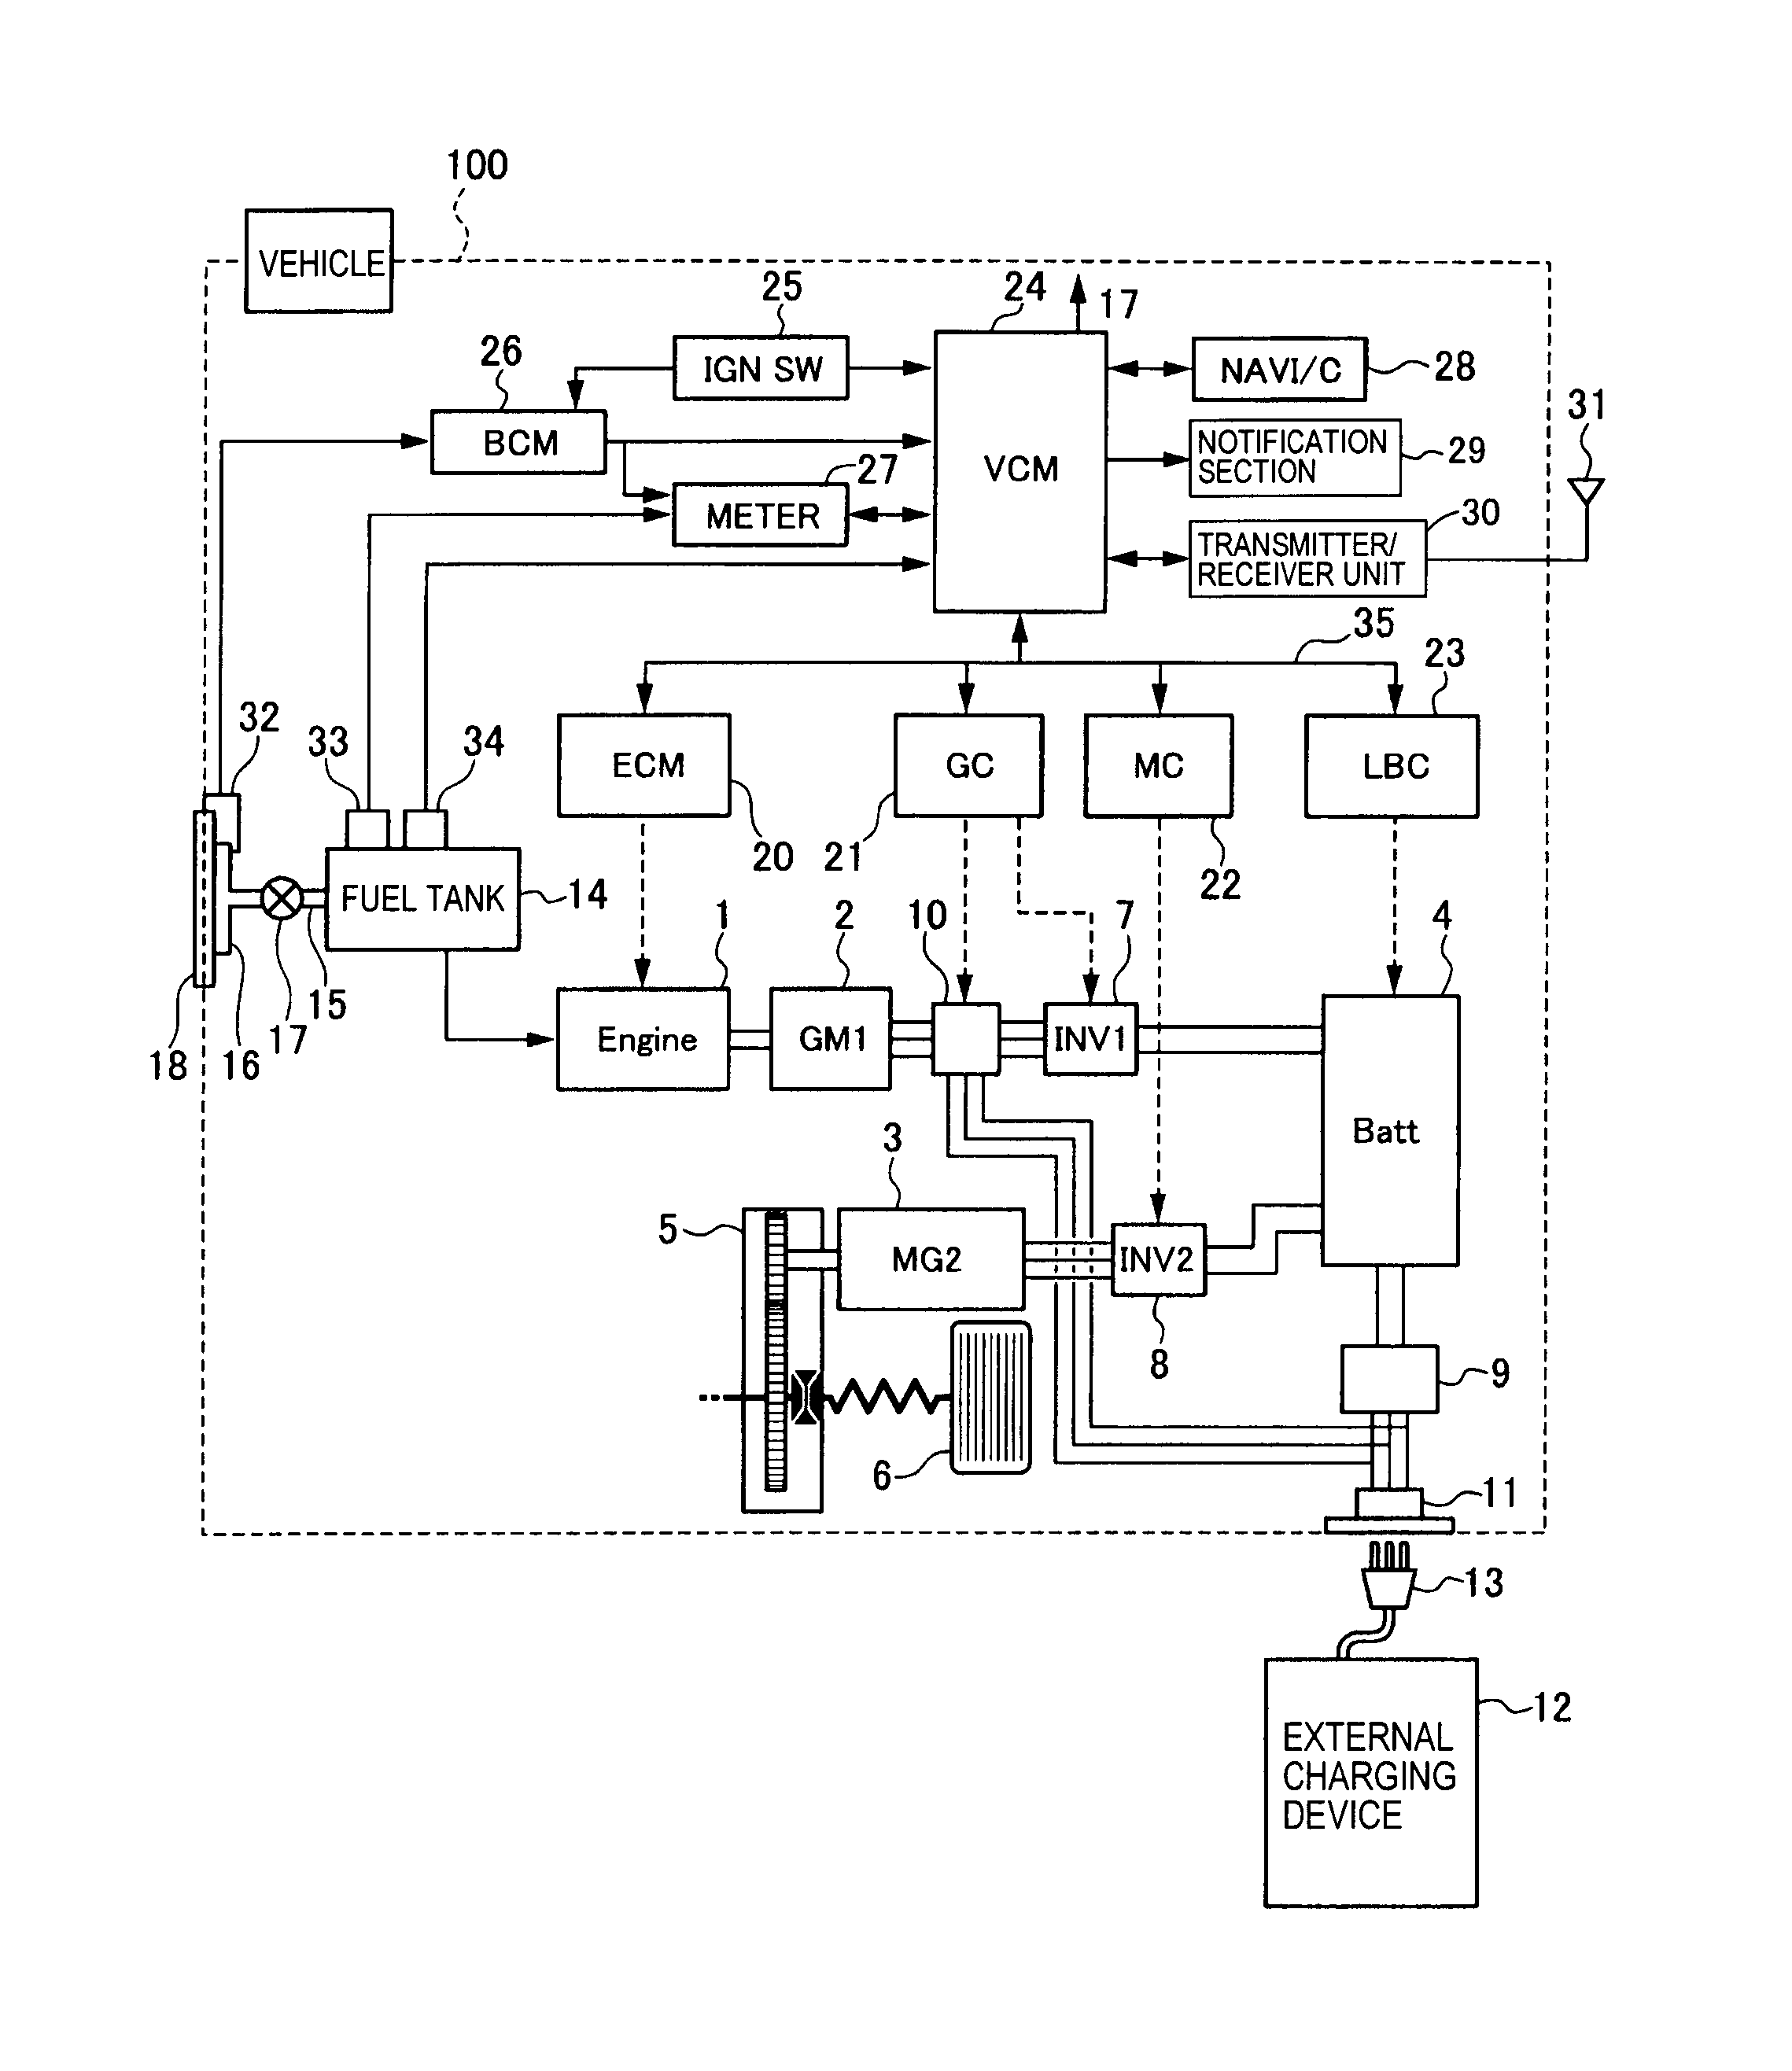 wiring diagram for 1991 mercury brunswick corp.16ft jon boat